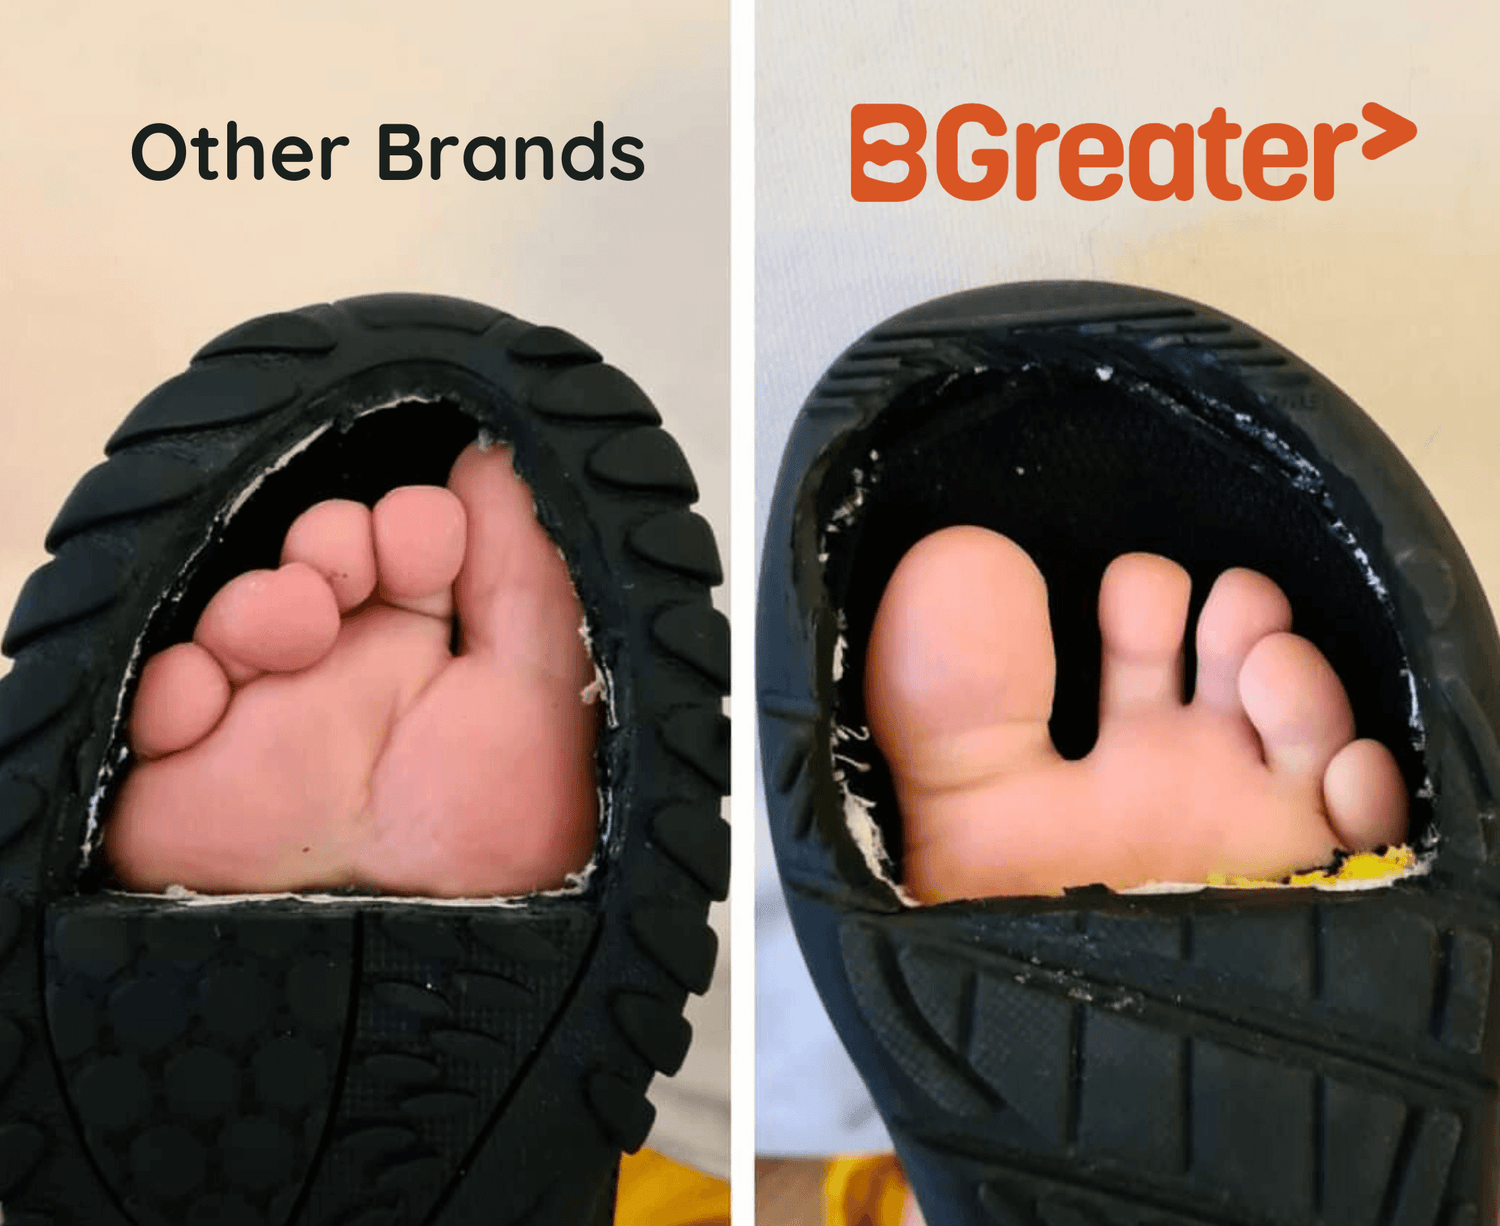 Bgreater barefoot wide toebox shoes vs regular shoes narrow toe box